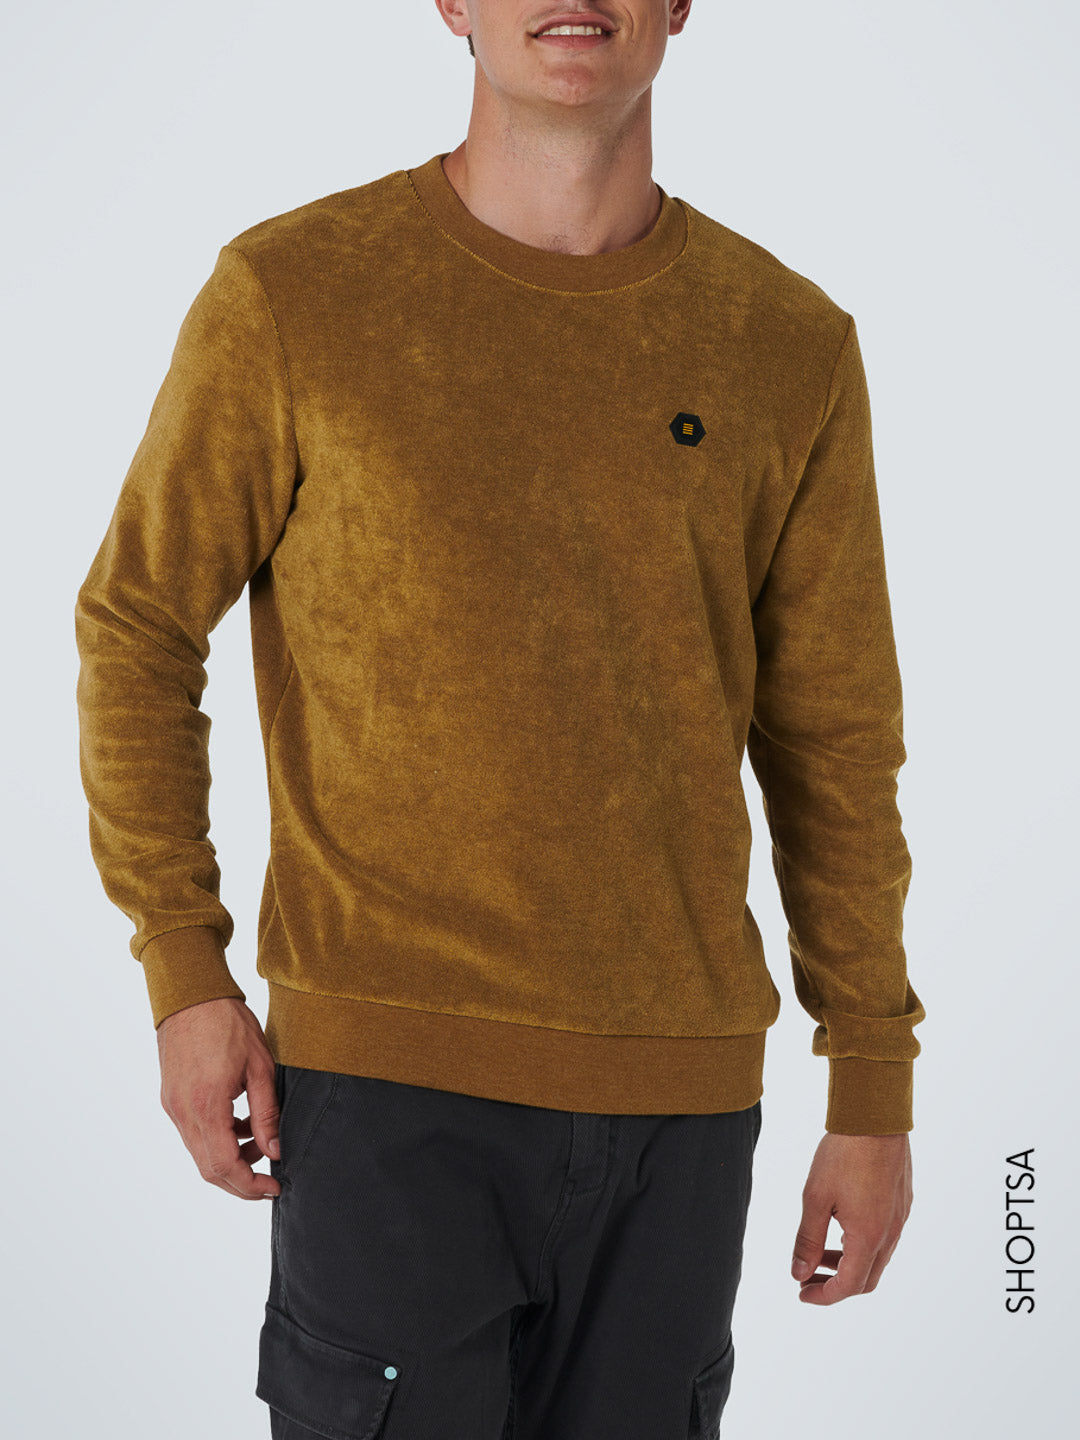 No-ex sweatshirt Art. 100827 P4-2965